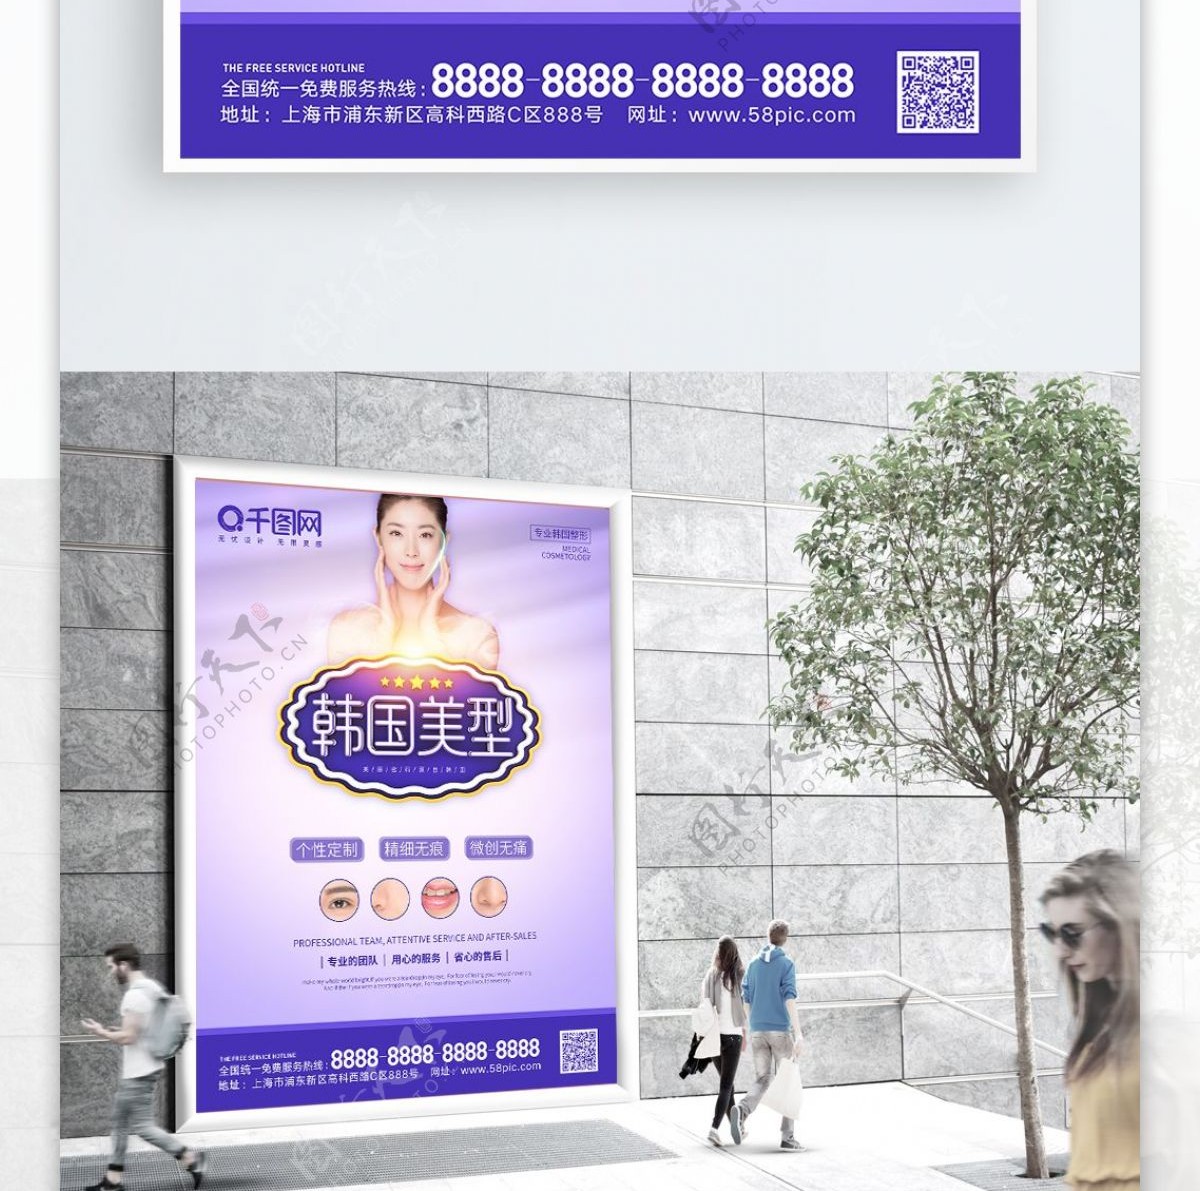 C4D韩国美型整形海报